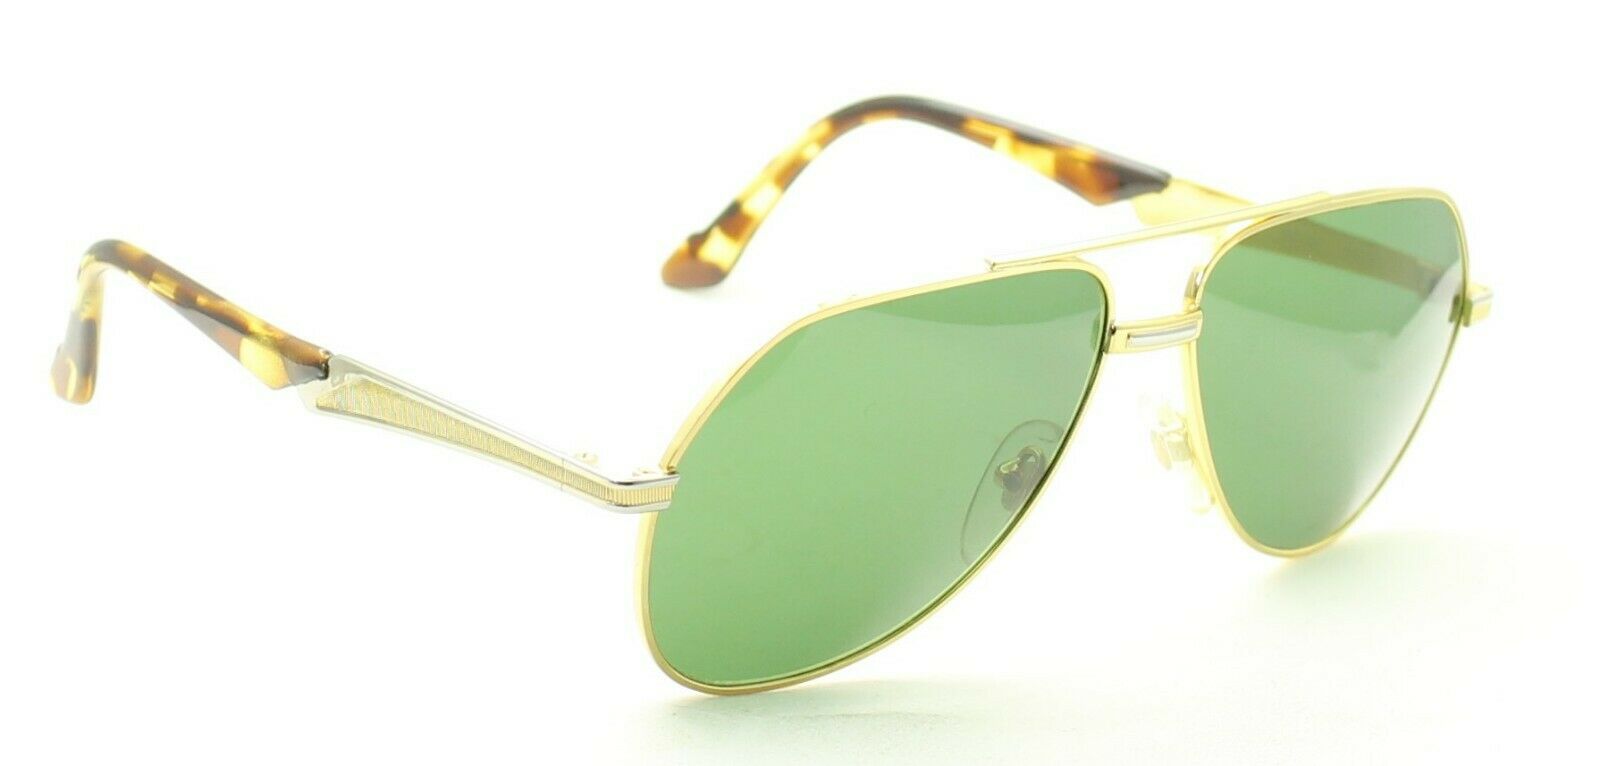 Hilton Eyewear Vintage Monsieur 024 00/06 55x22mm Sunglasses Shades Glasses -NOS